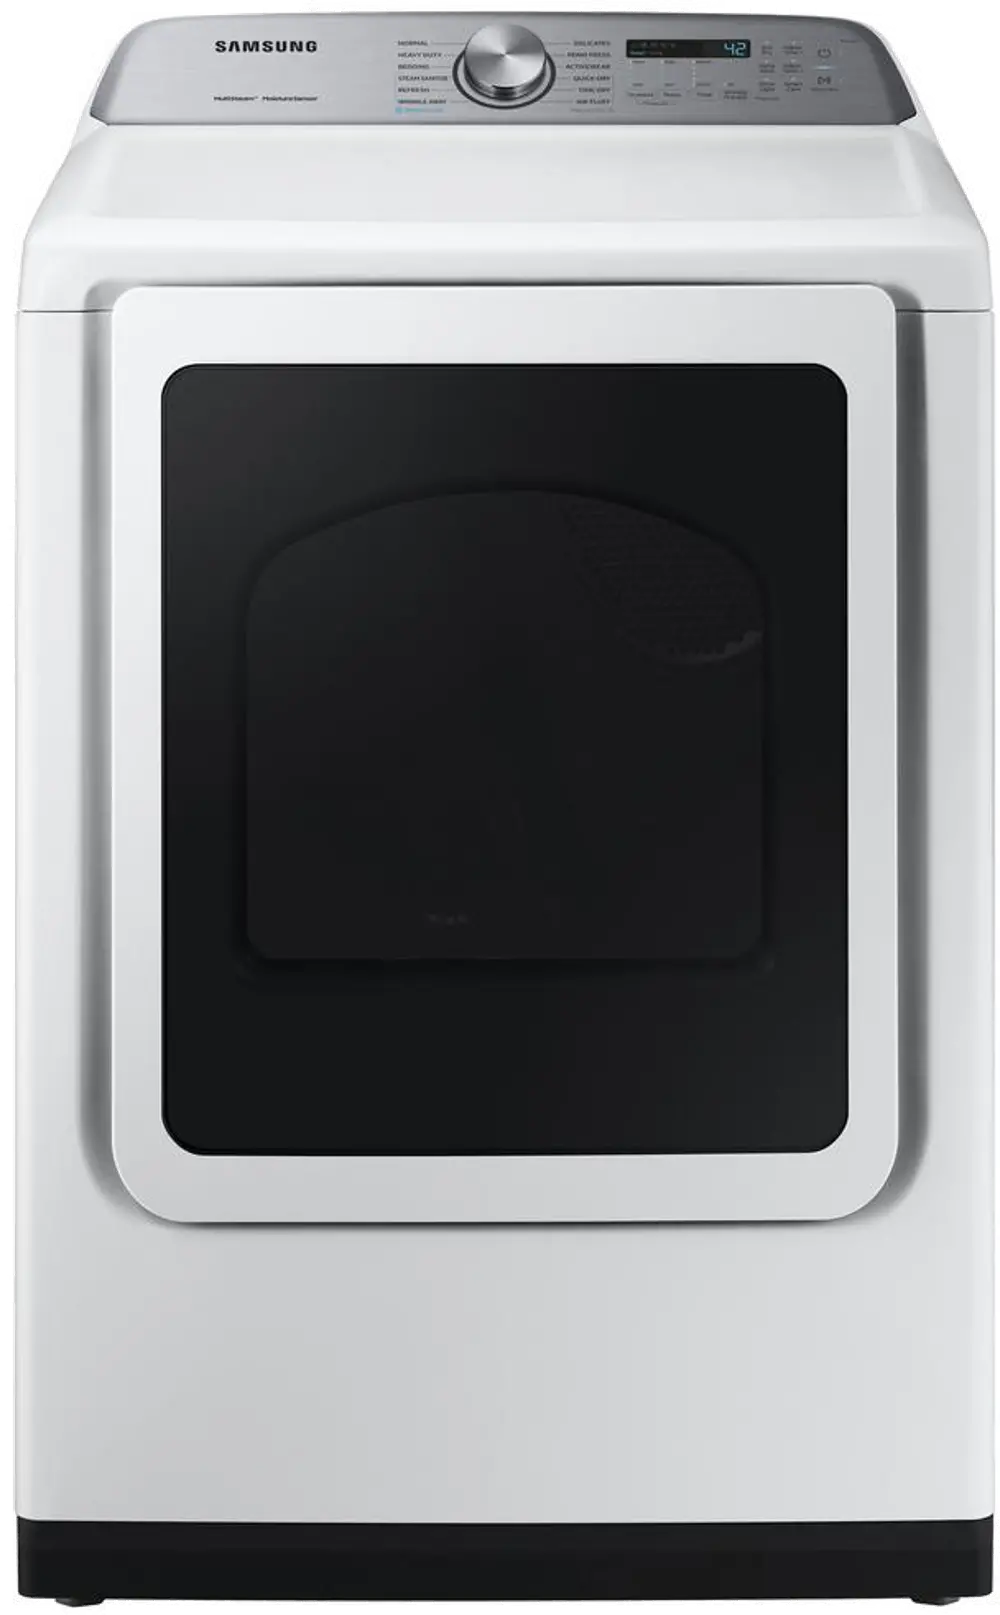 DVE50R5400W Samsung Steam Sanitize+ Electric Dryer - 7.4 cu. ft. White-1